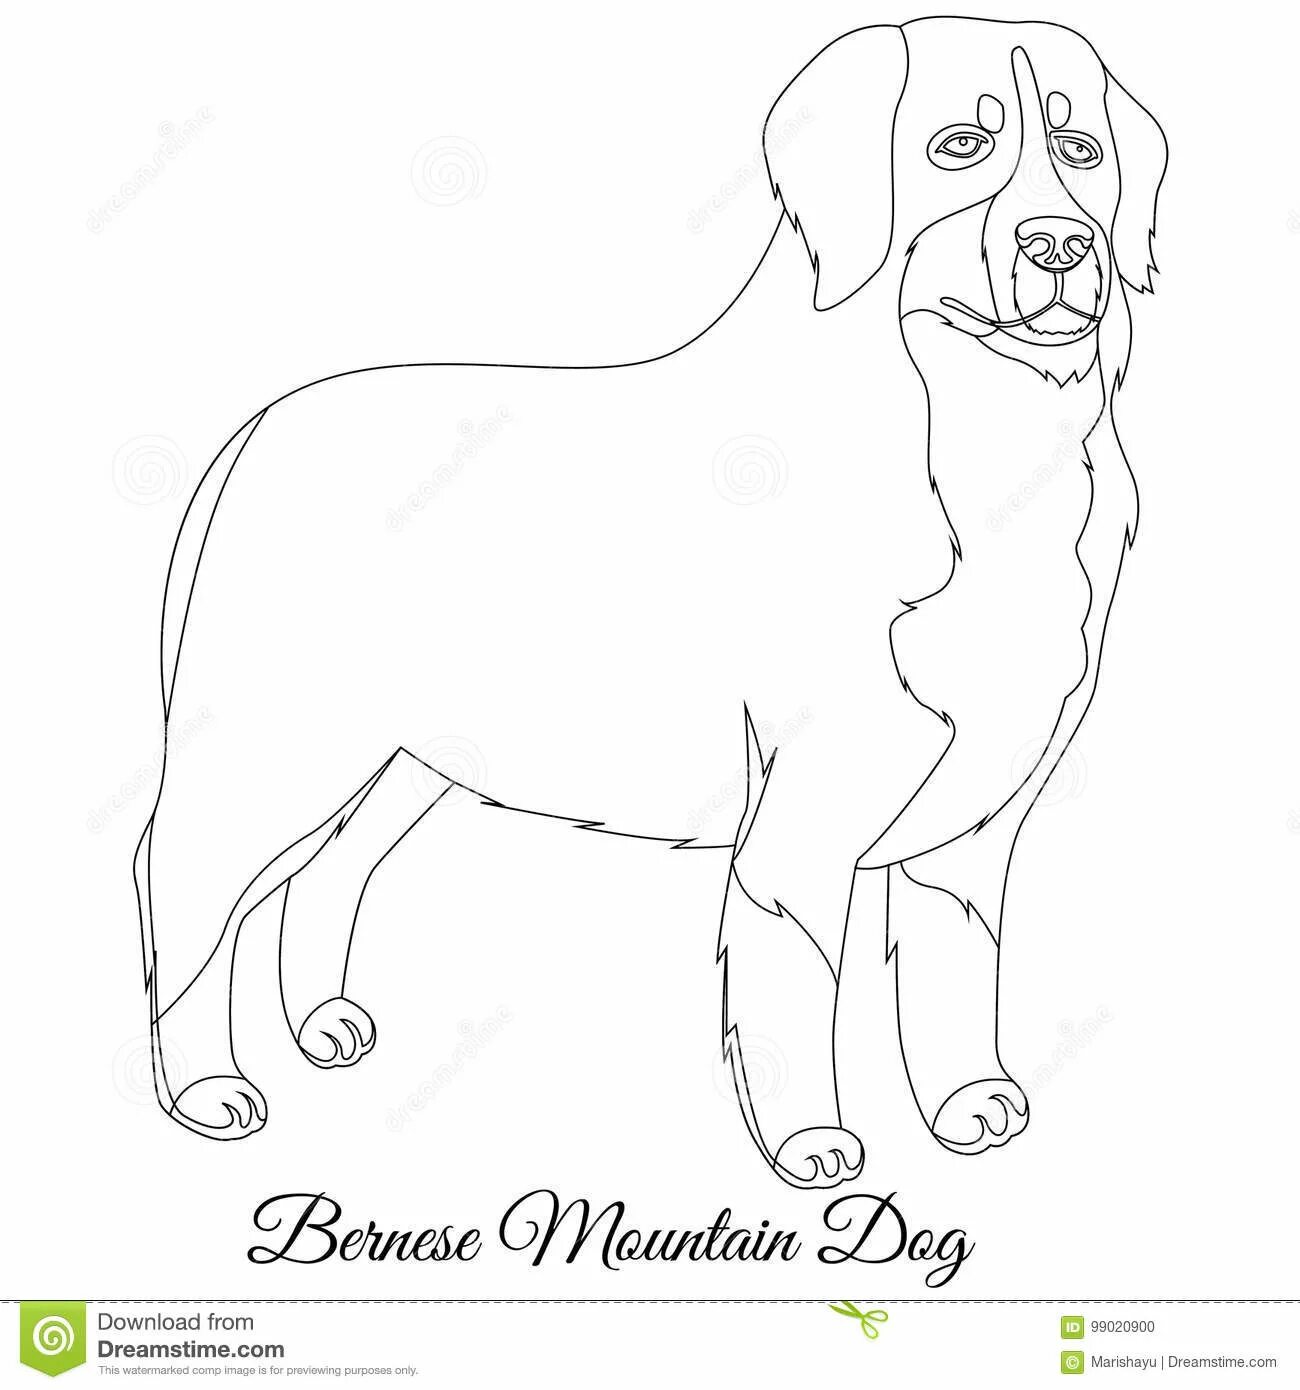 Bernese Mountain Dog #2